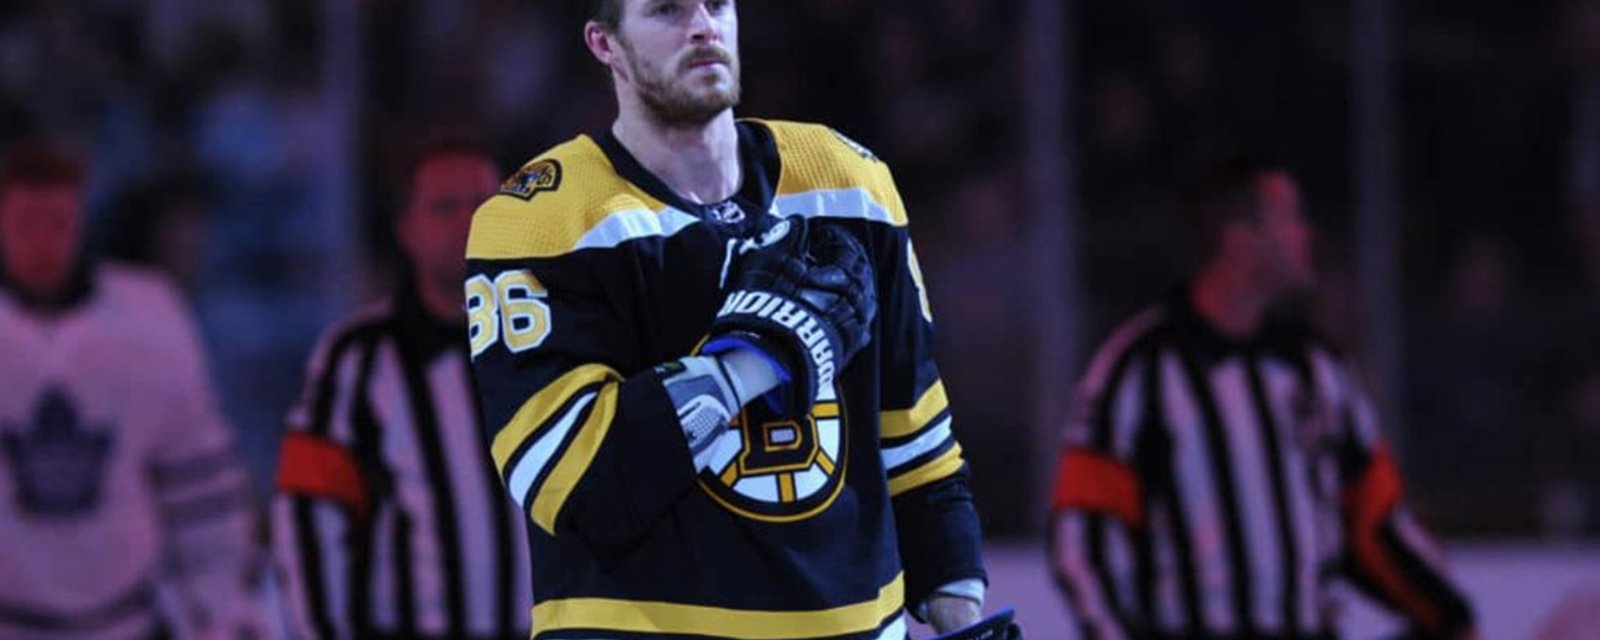 ICYMI: Bruins defensemen Miller rushed to the hospital after taking John Tavares shot in throat